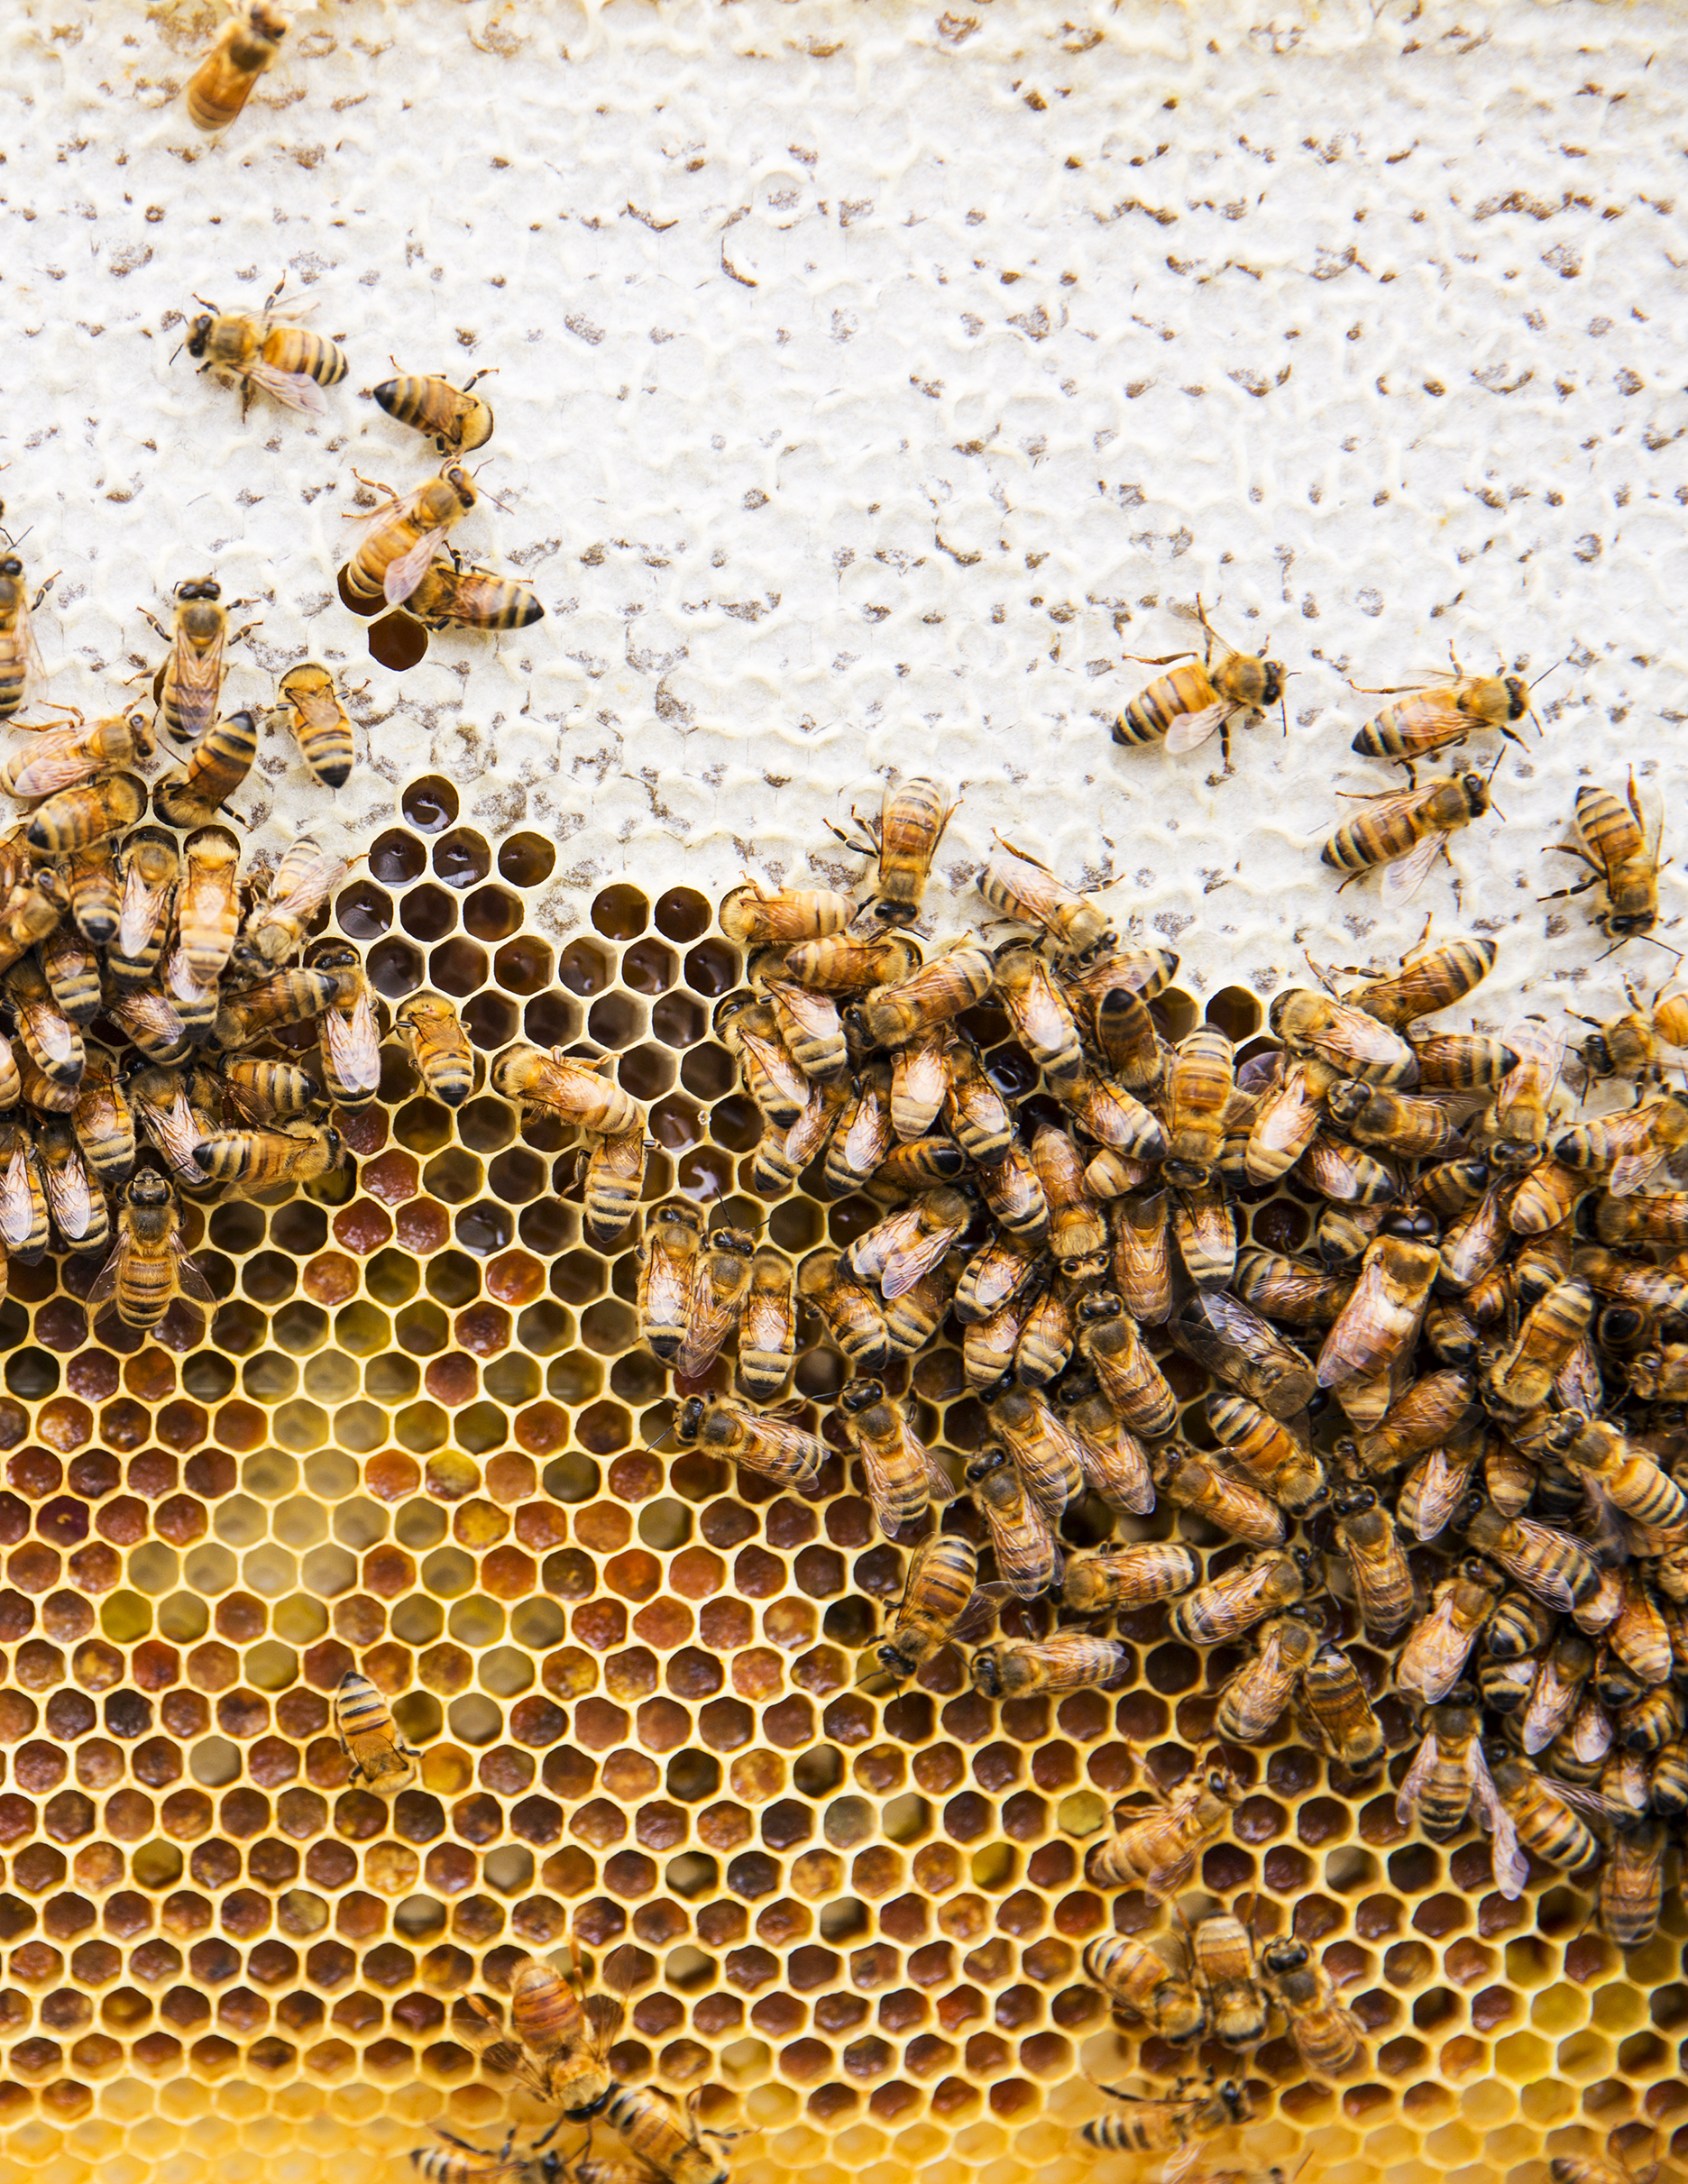 Burggraaf_Charity-Seattle_Food_Photographer-Beekeeping-Hive.jpg